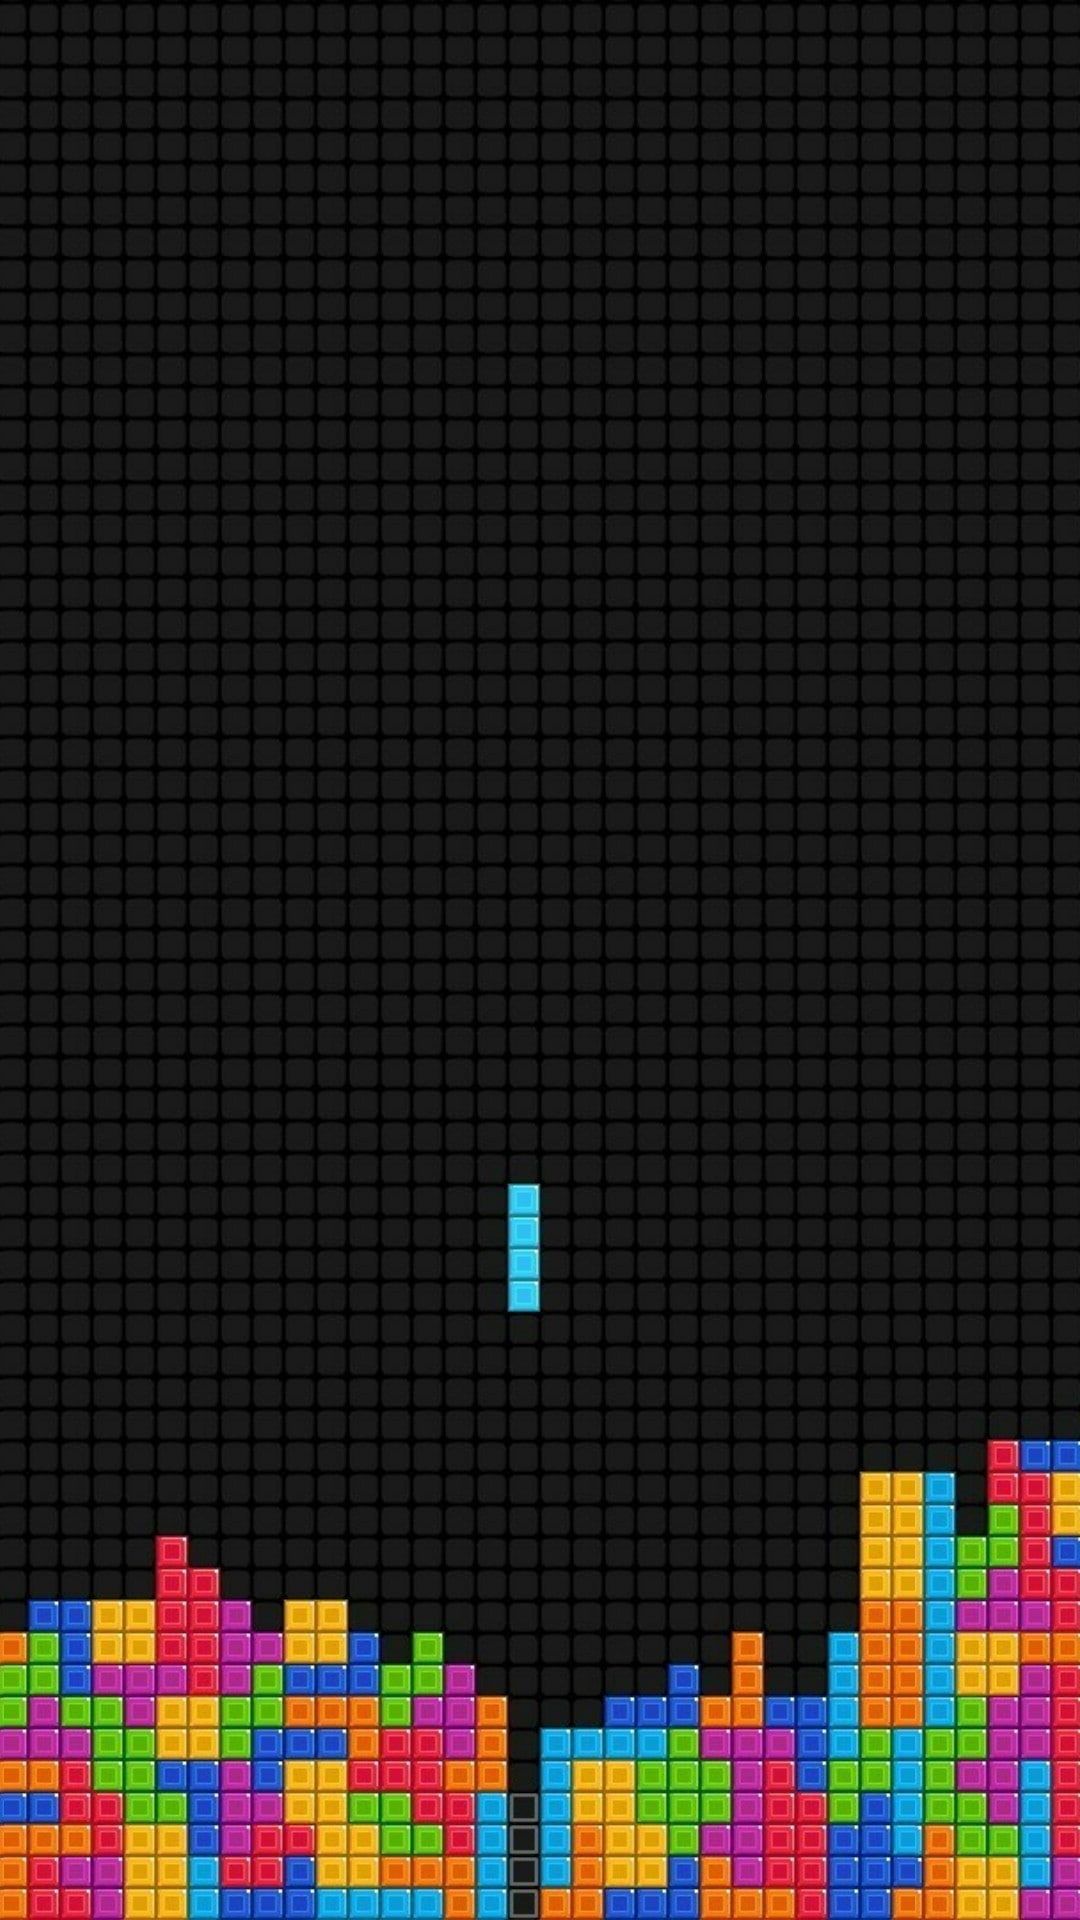 Colorful Portrait Display retro Games #Simple #Square #Tetris